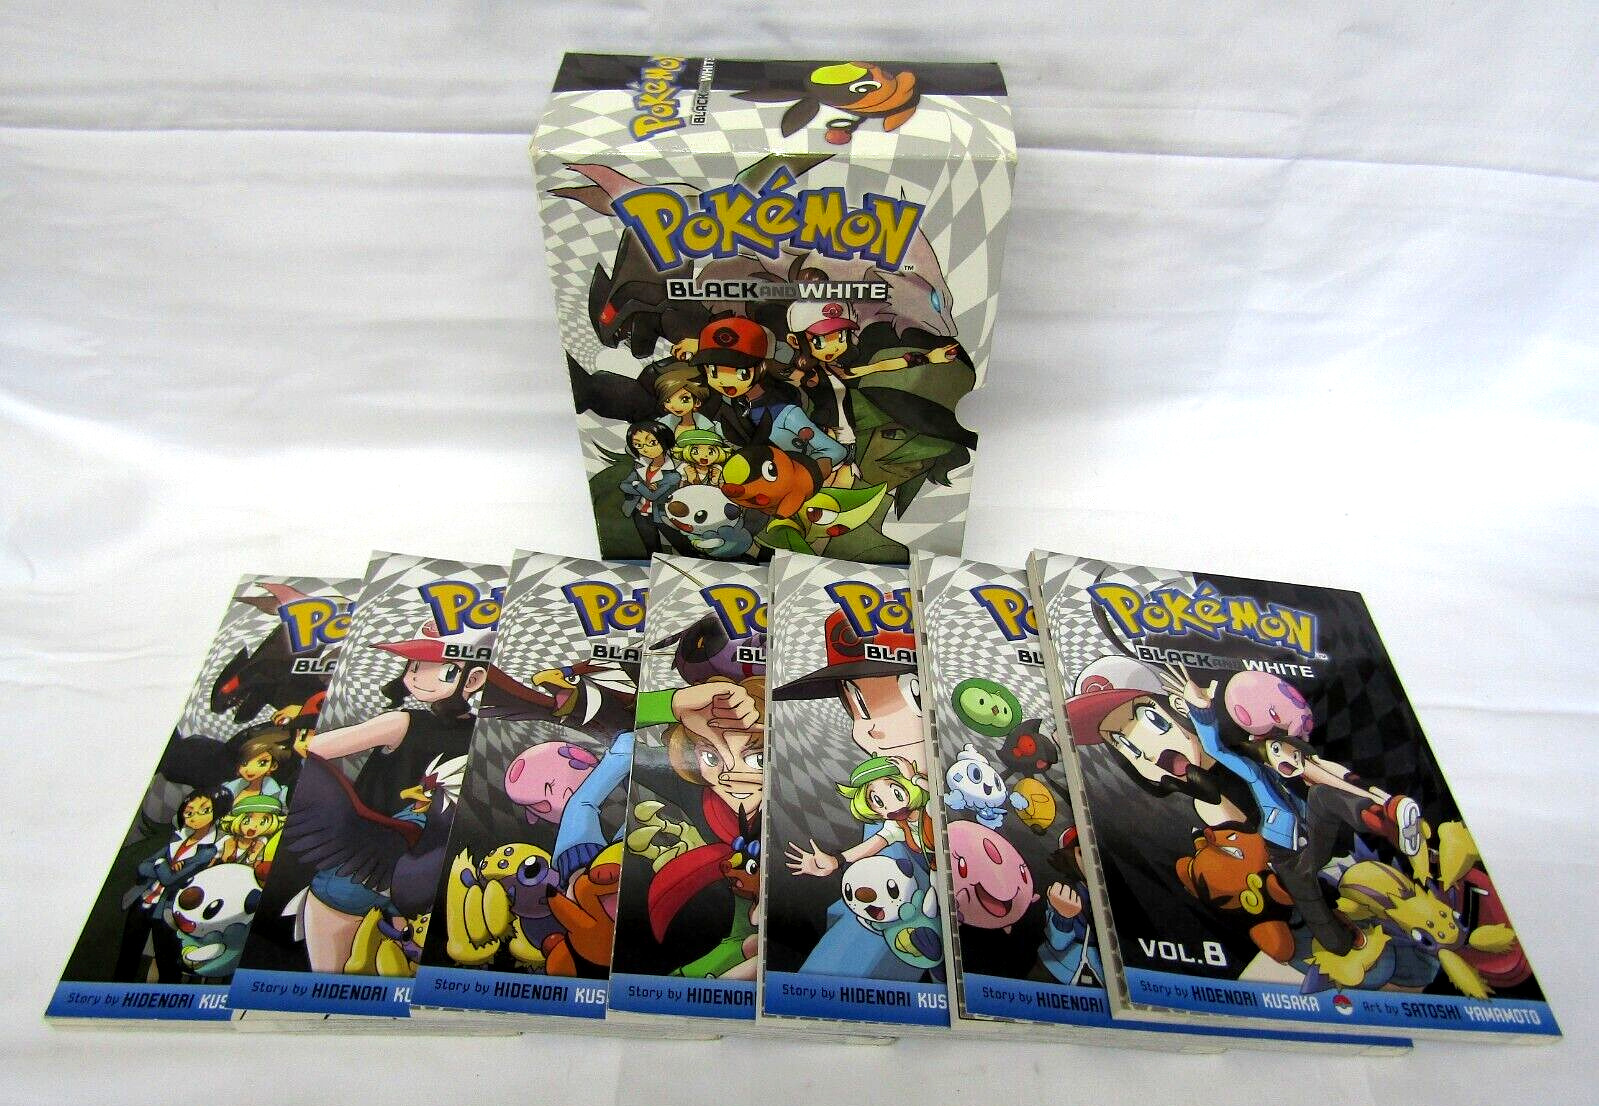 Pokémon Adventures Black and White Vol 1-2, 4-8 Missing Vol 3, No Poster